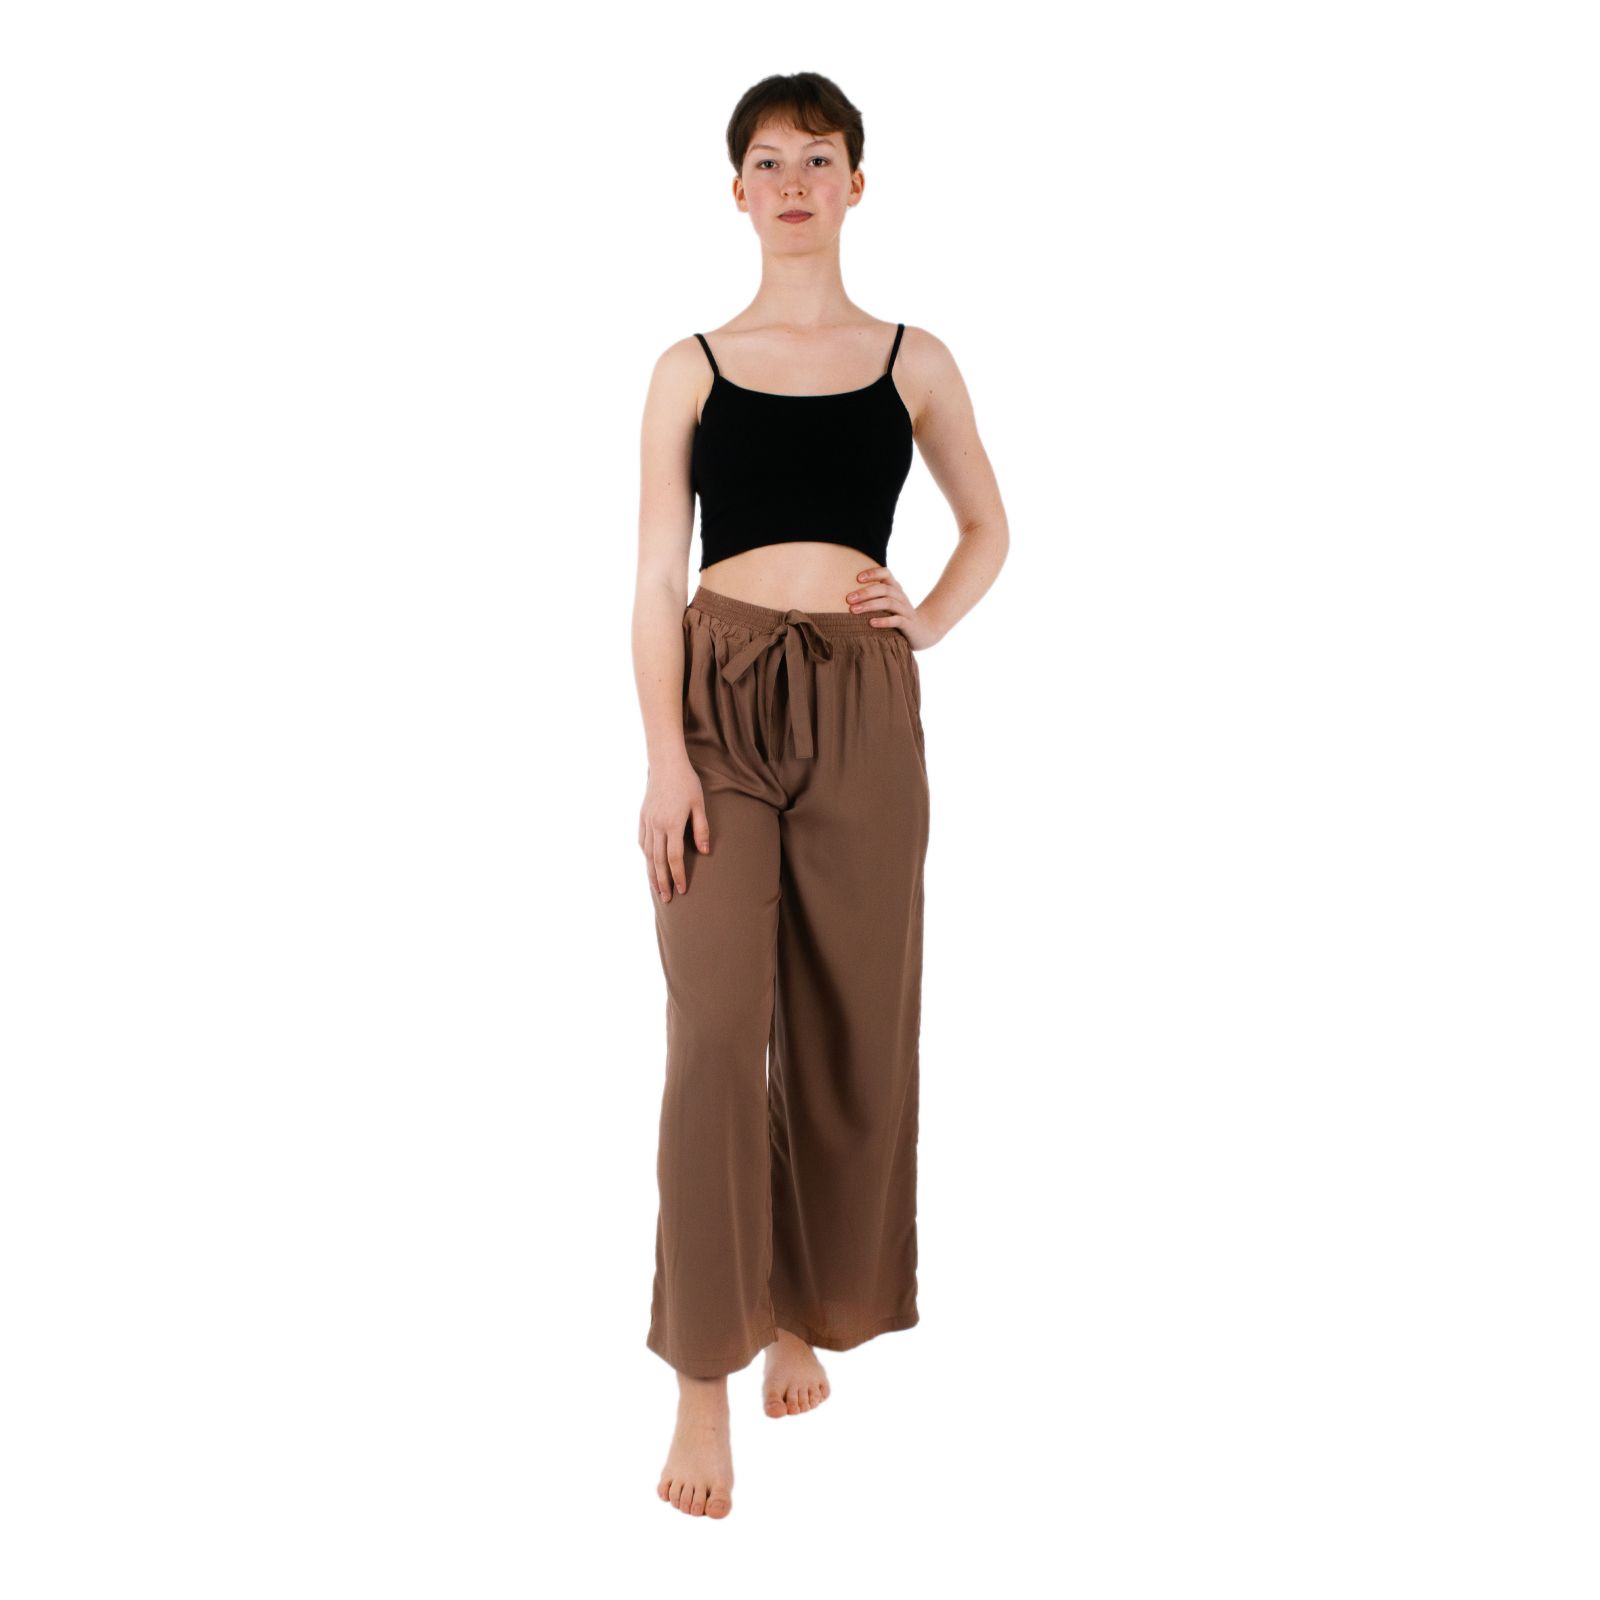 Jednobarevné kalhoty Sarai Cinnamon brown Thailand